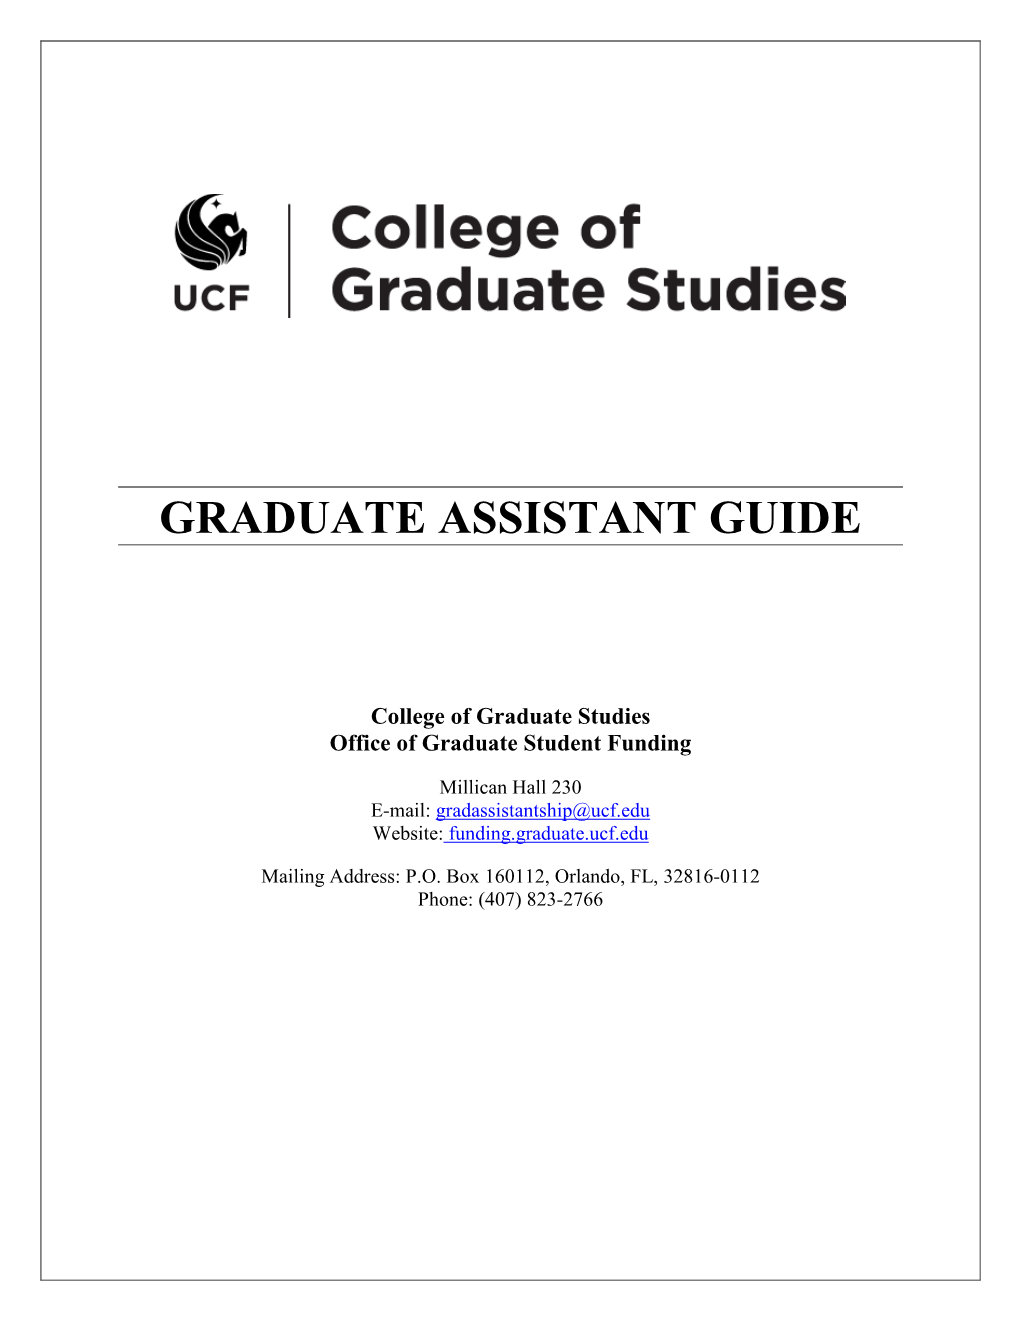 Graduate Assistant Guide